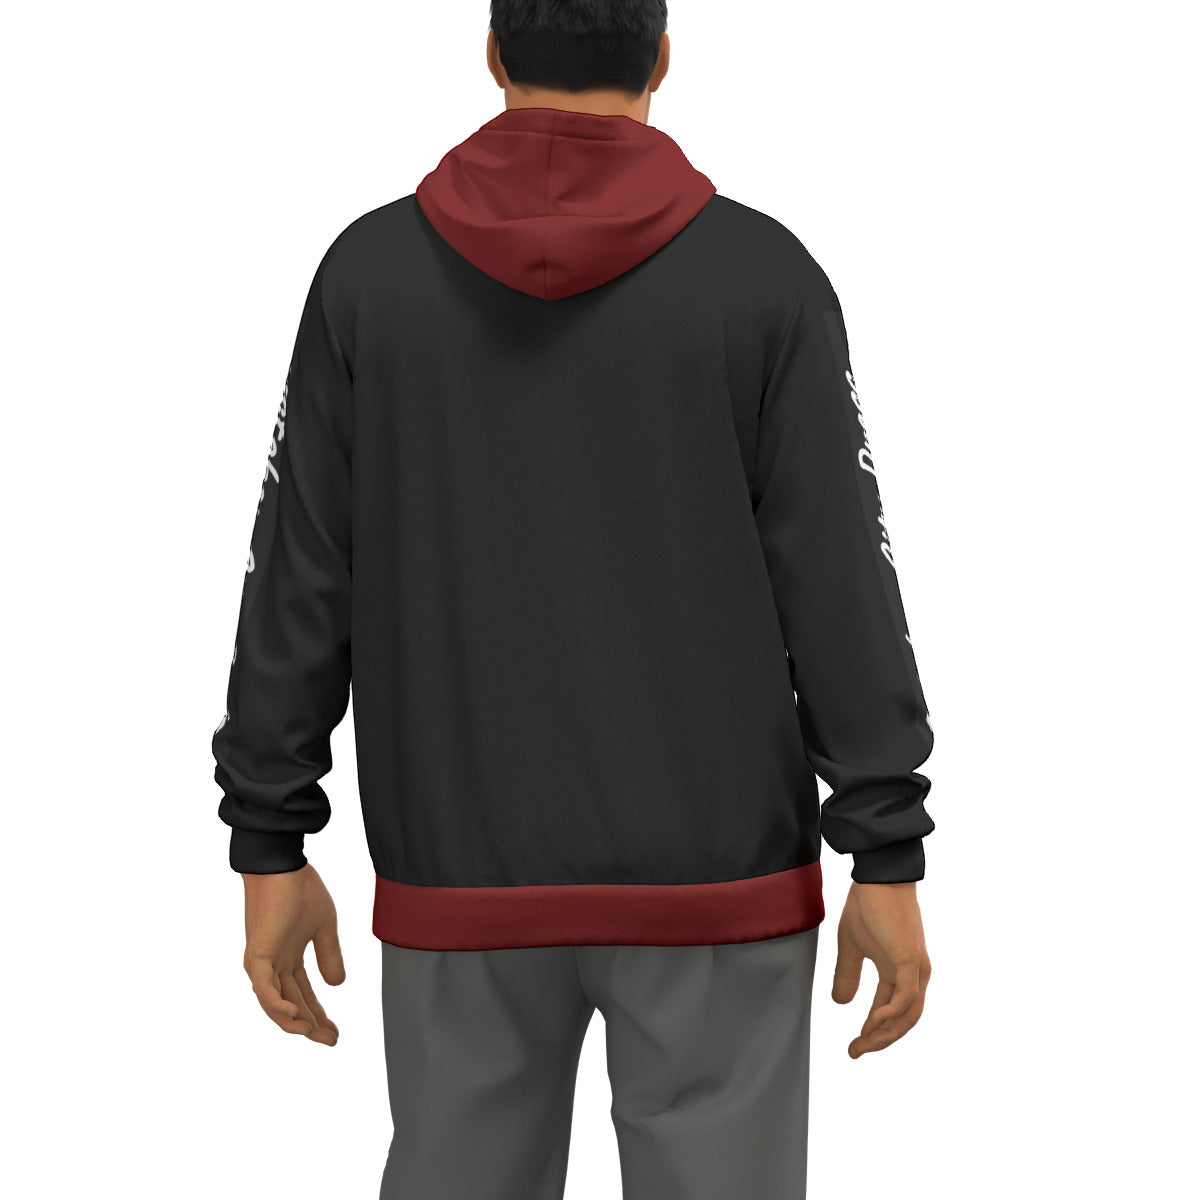 October City Press 2023 logo hoodie pullover 100% lightweight Cotton (black)